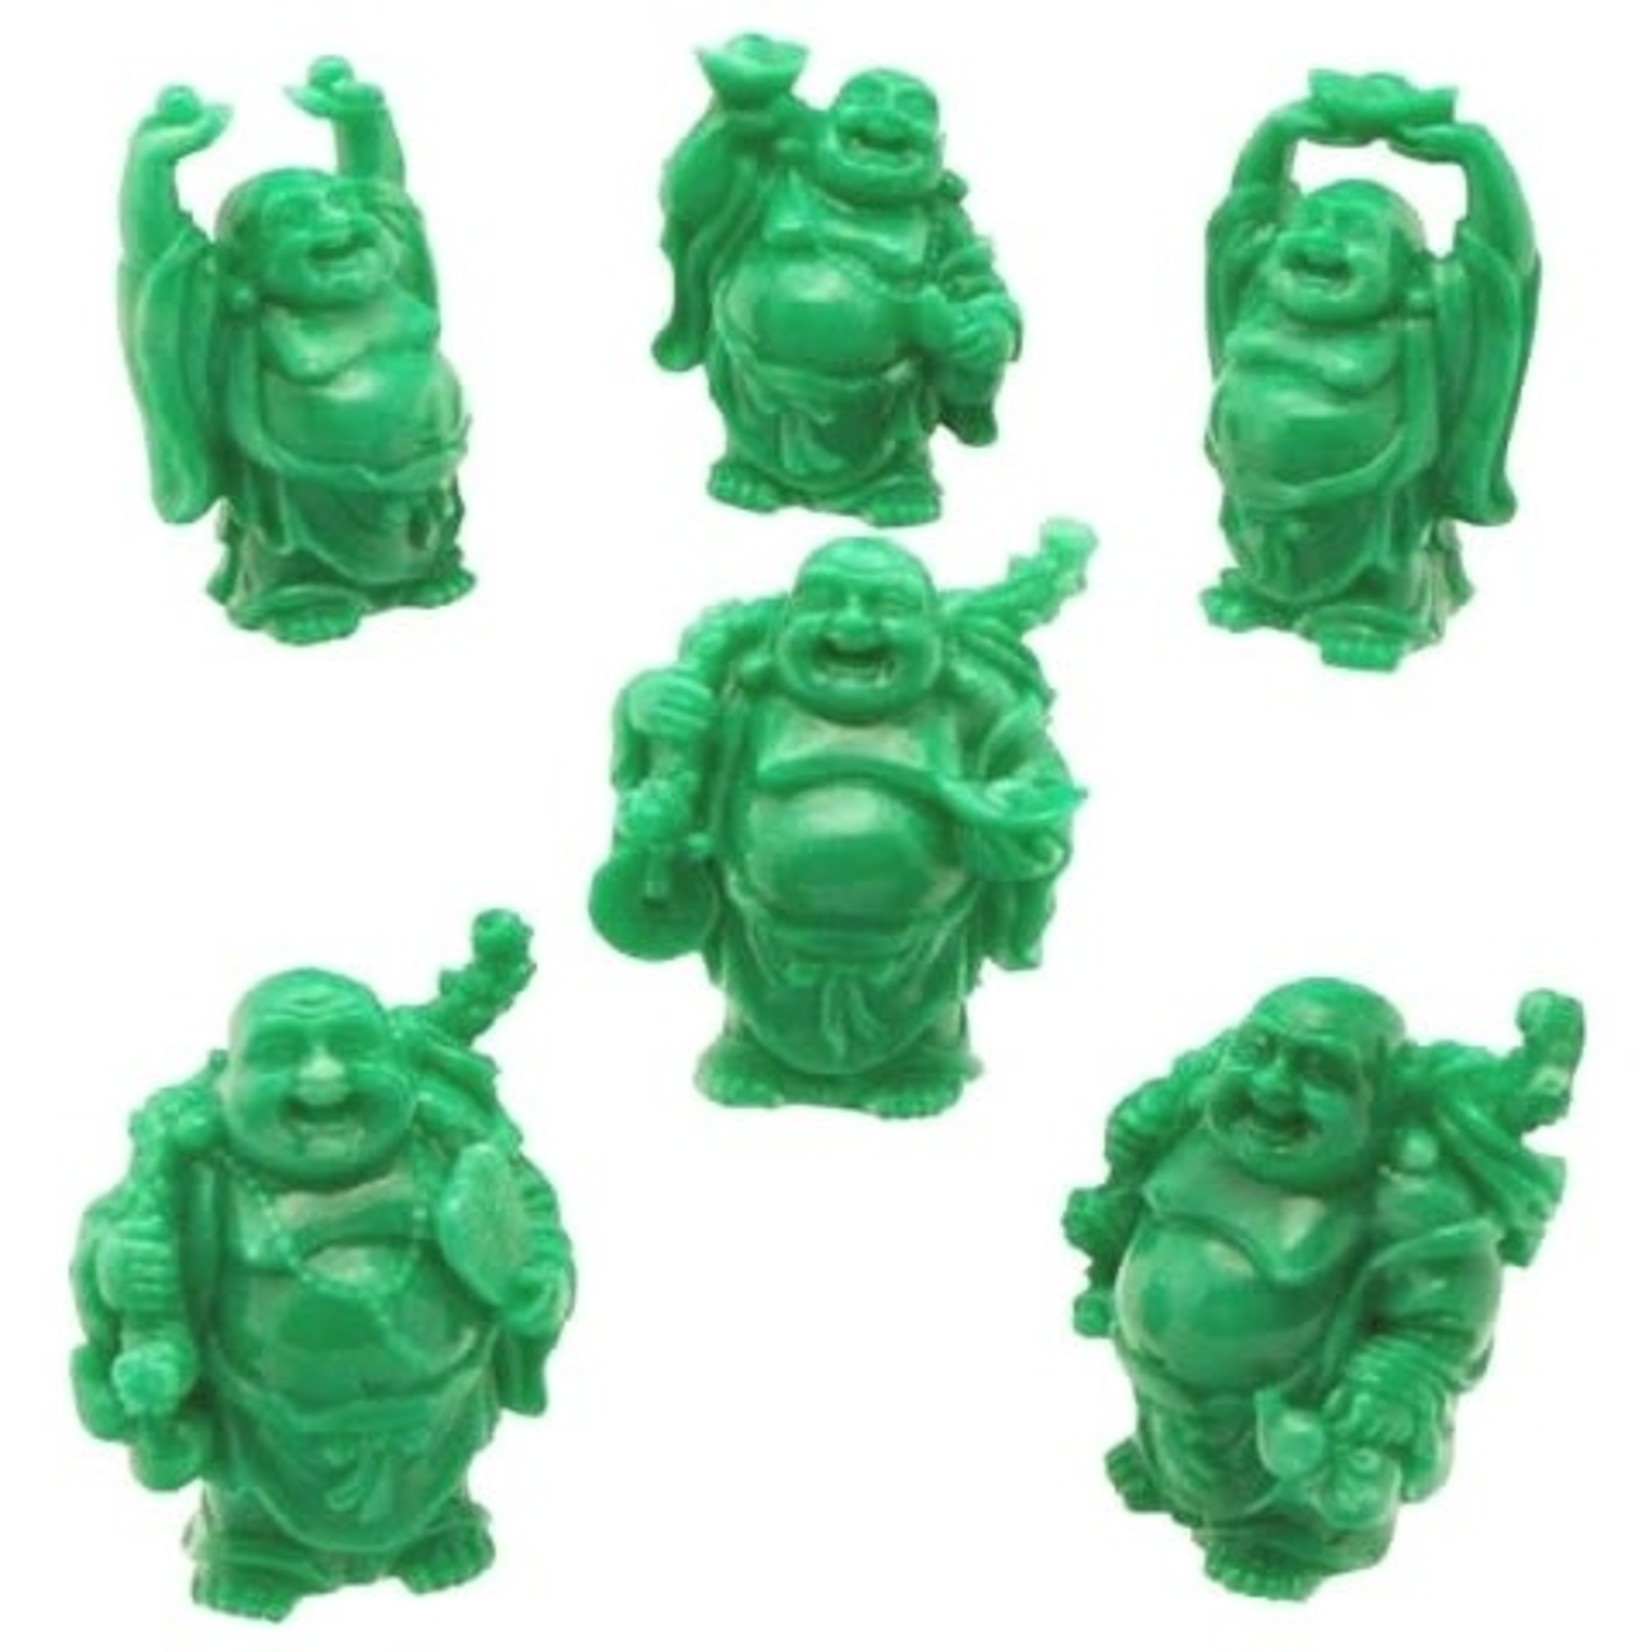 Laughing Buddha 2 Inch Statues (Set of 6 Figurine) -Jade